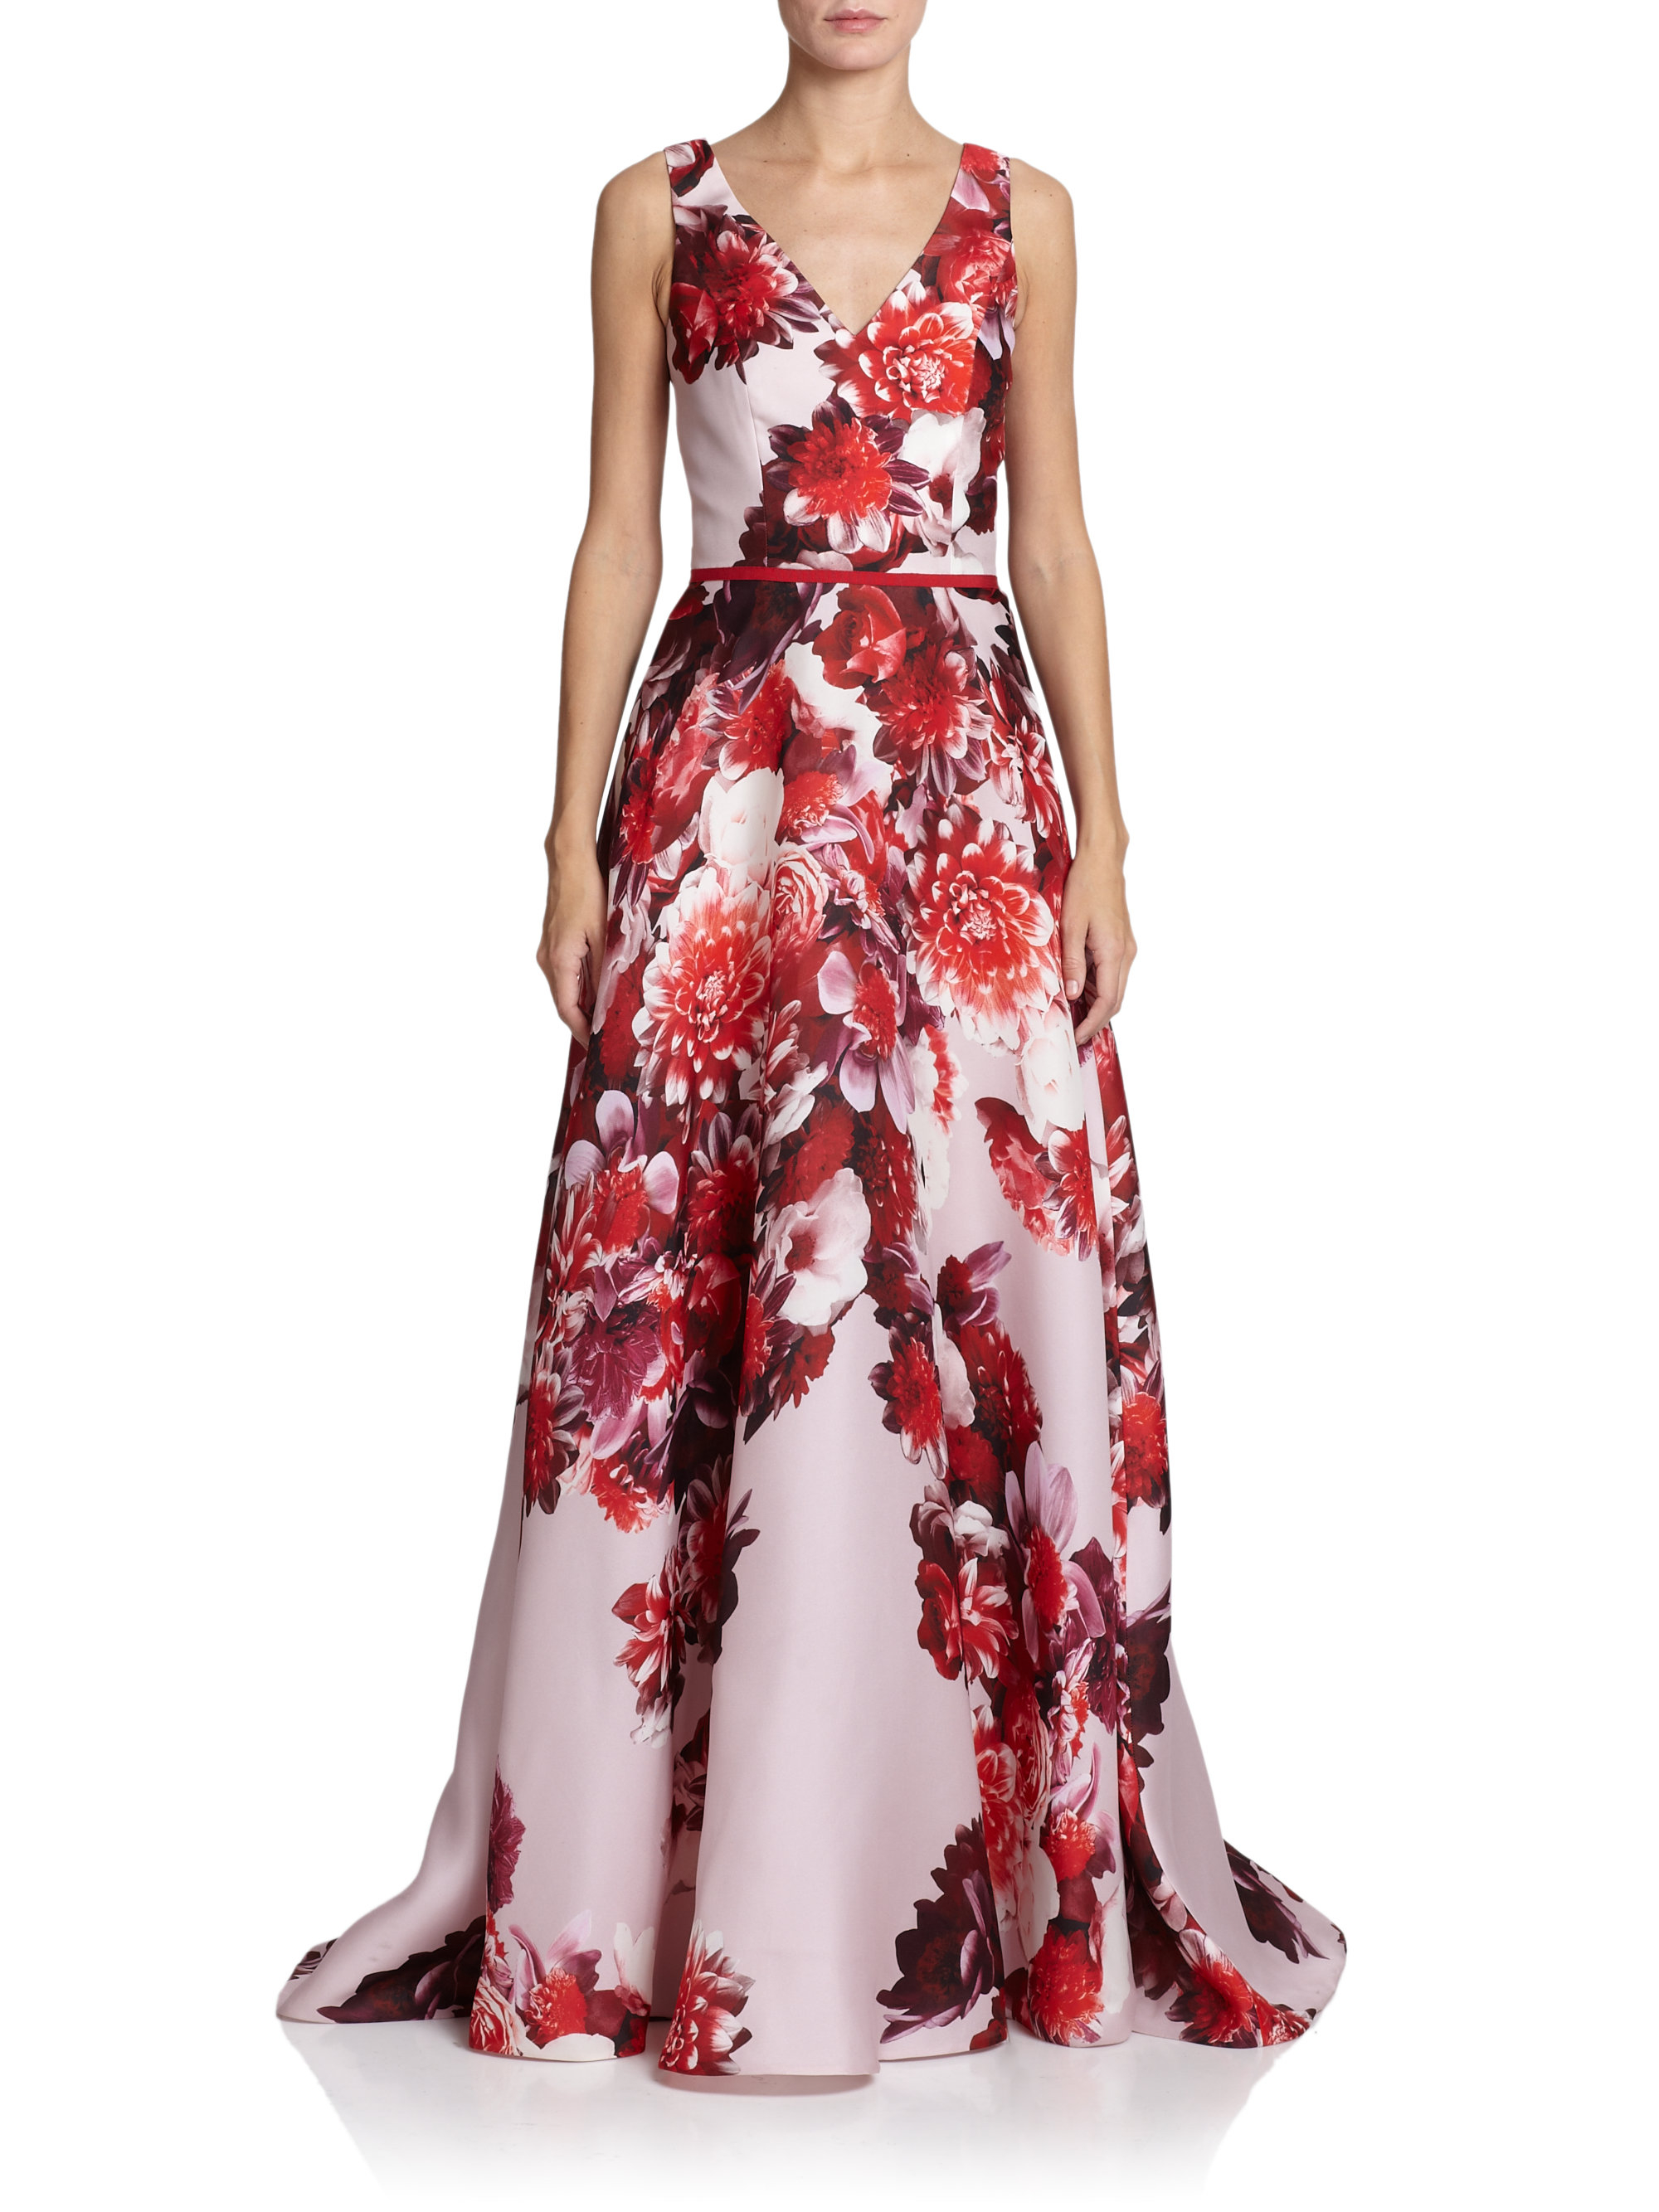 Carolina Herrera Floral Satin Gown in Pink - Lyst